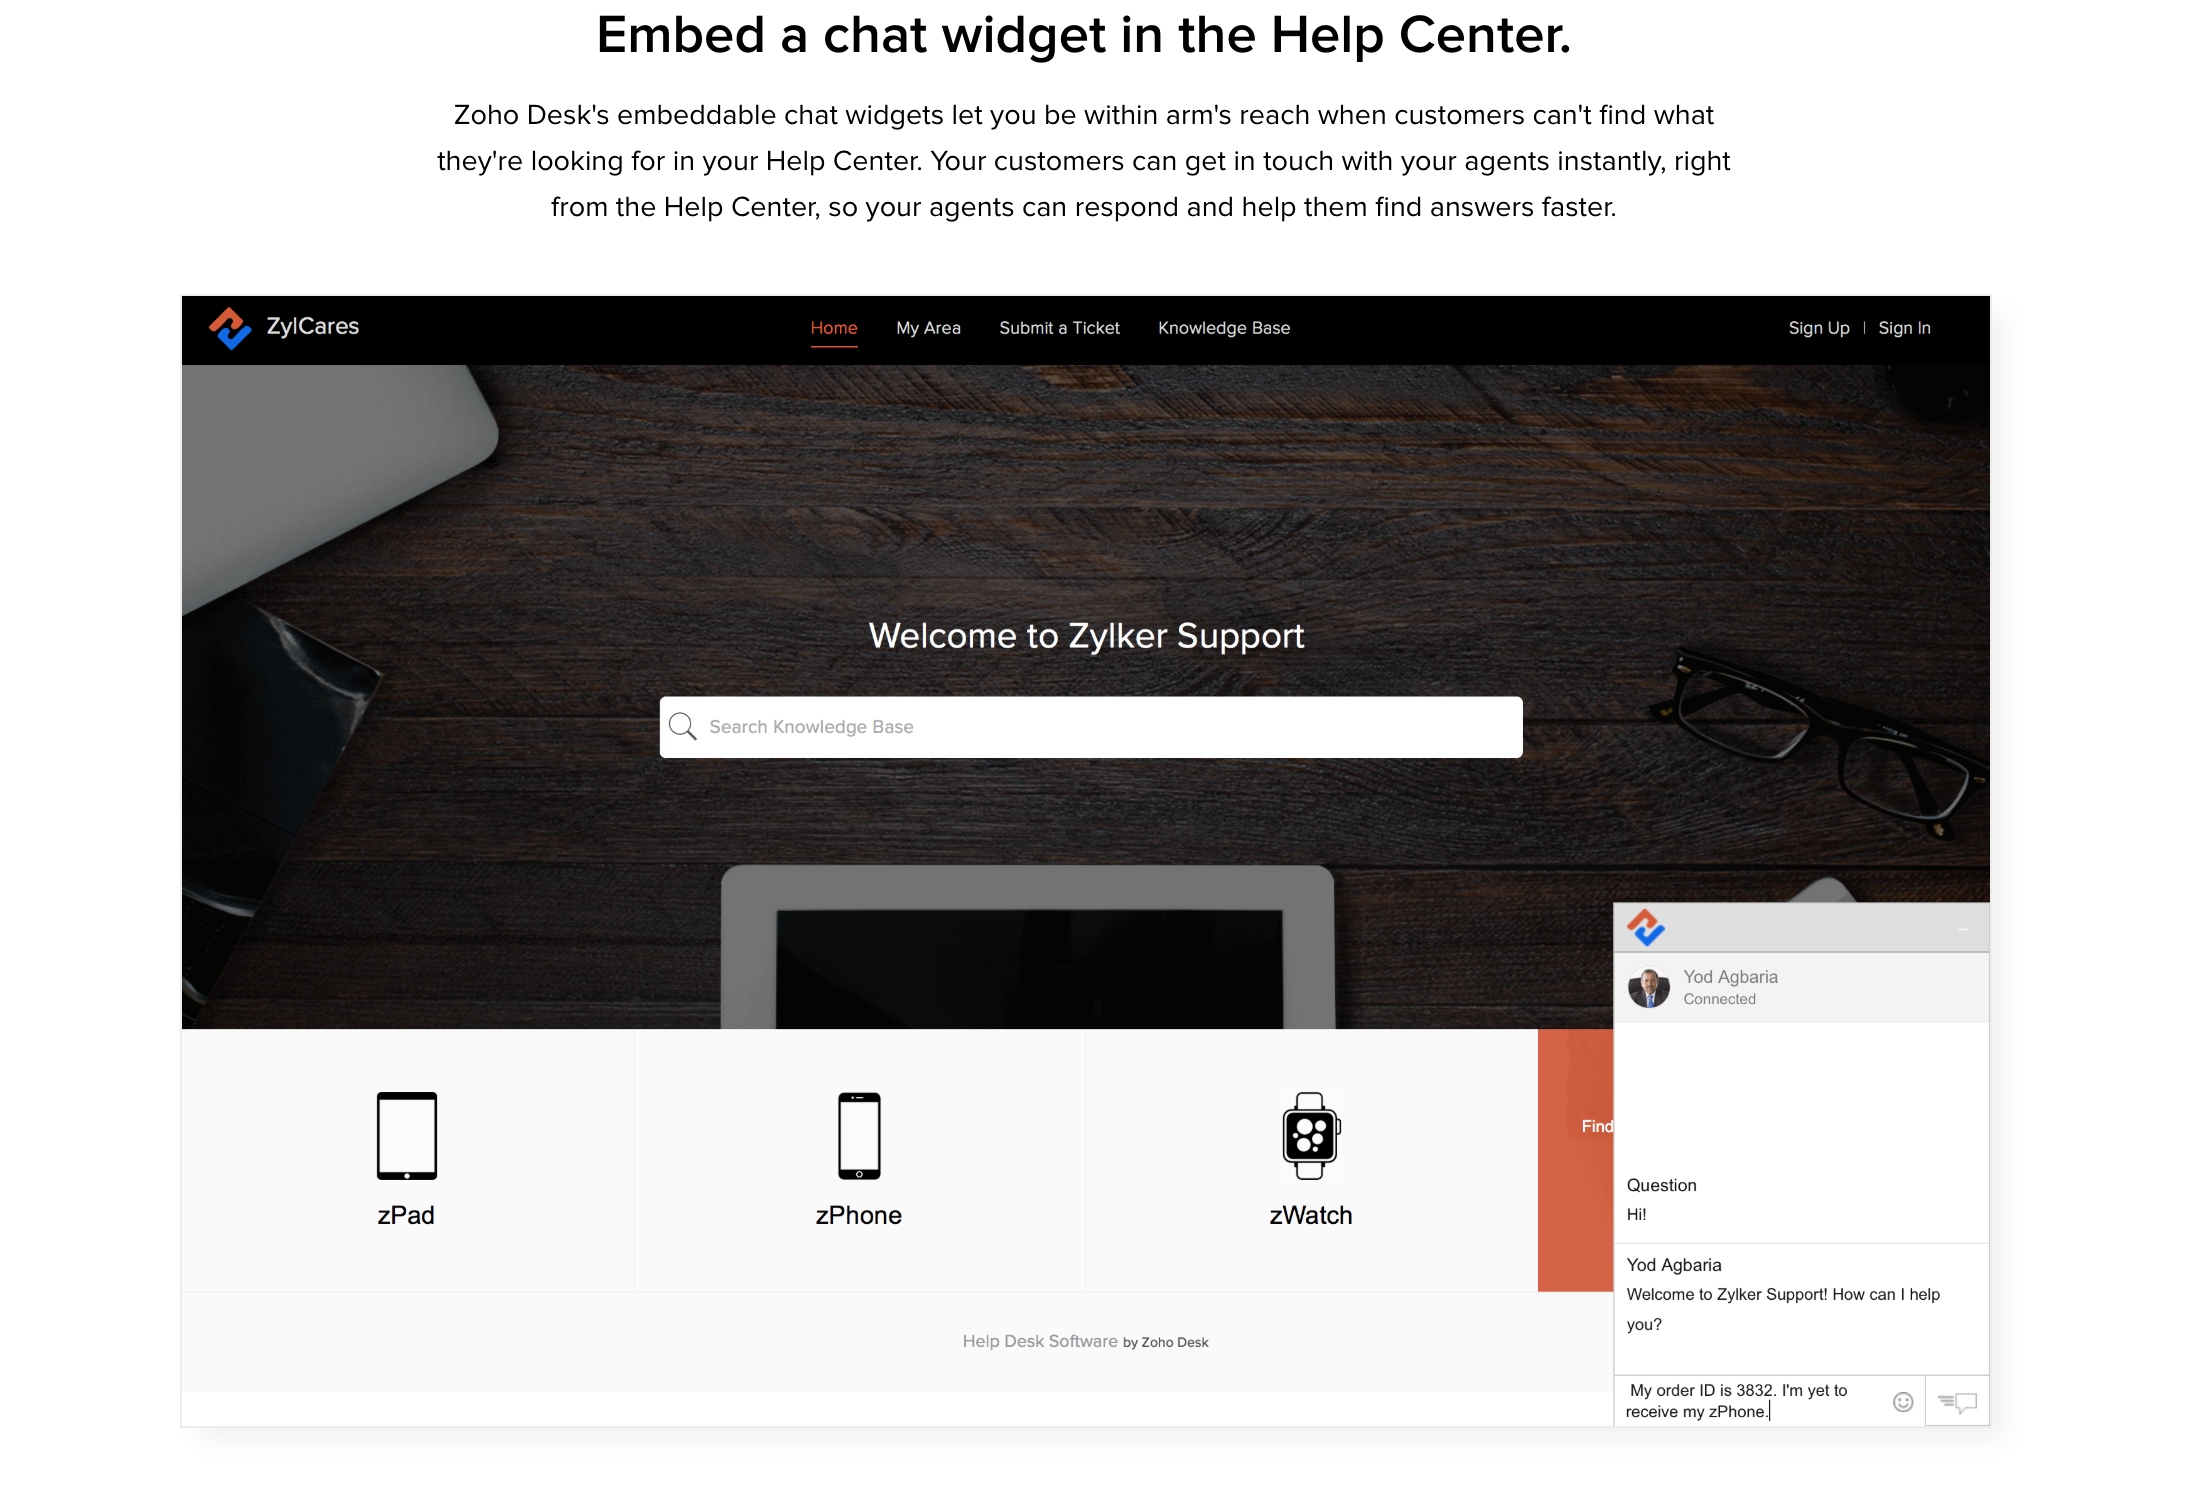 Zoho Desk Software - Embed Live Chat Widget